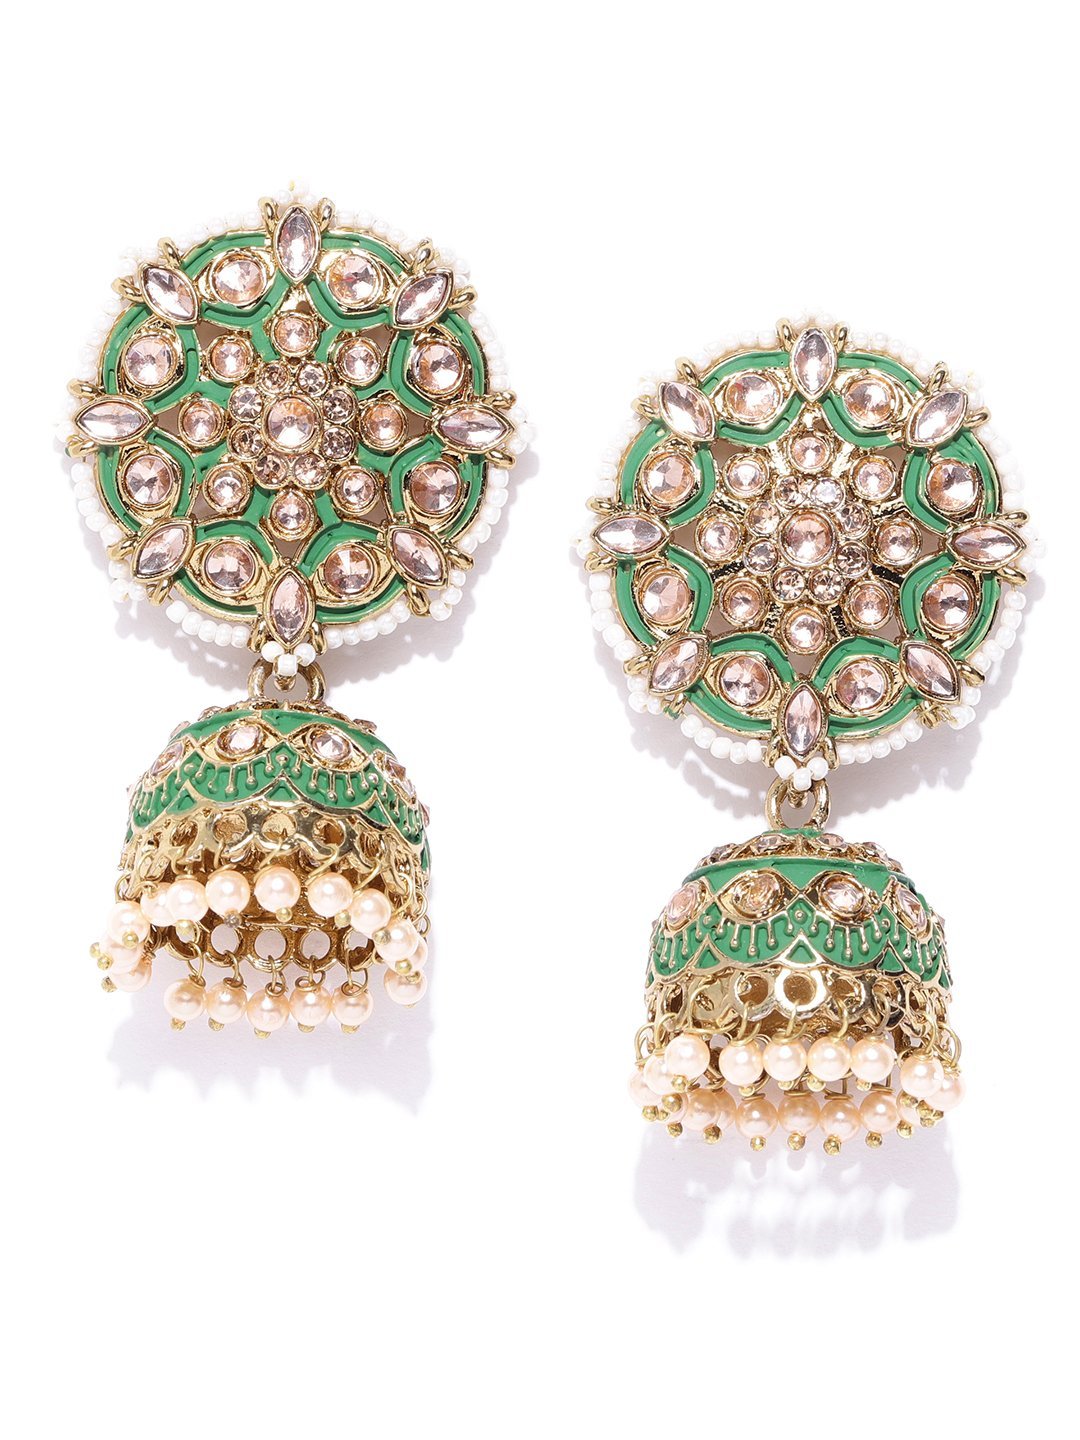 Women's Gold-Plated Stones Studded Meenakari Jhumka Earrings in Green color with Pearls Drop - Priyaasi